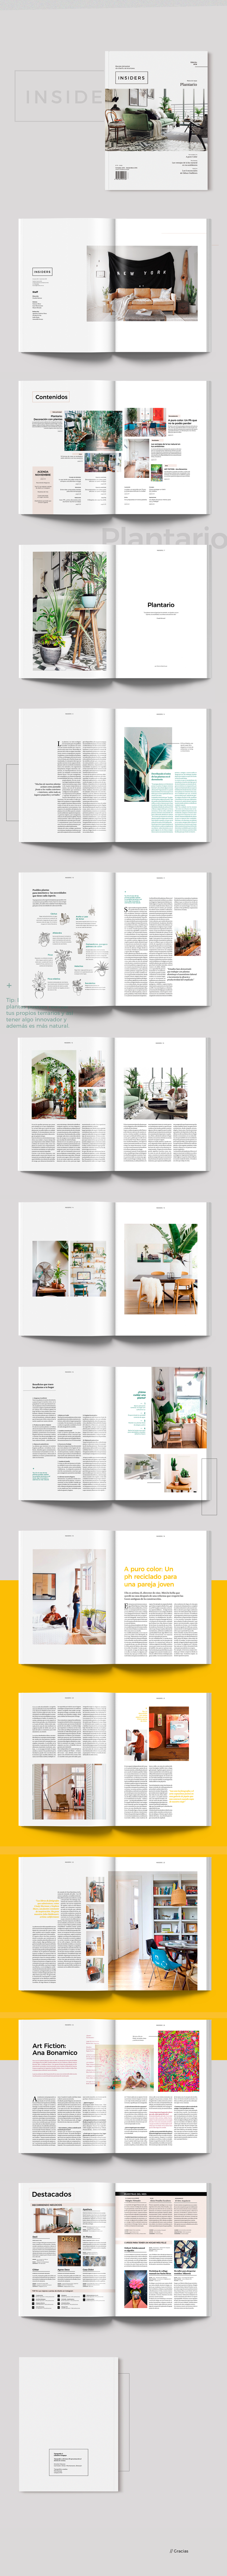 magazine editorial design  cosgaya revista tipography type Booklet flat grid minimal